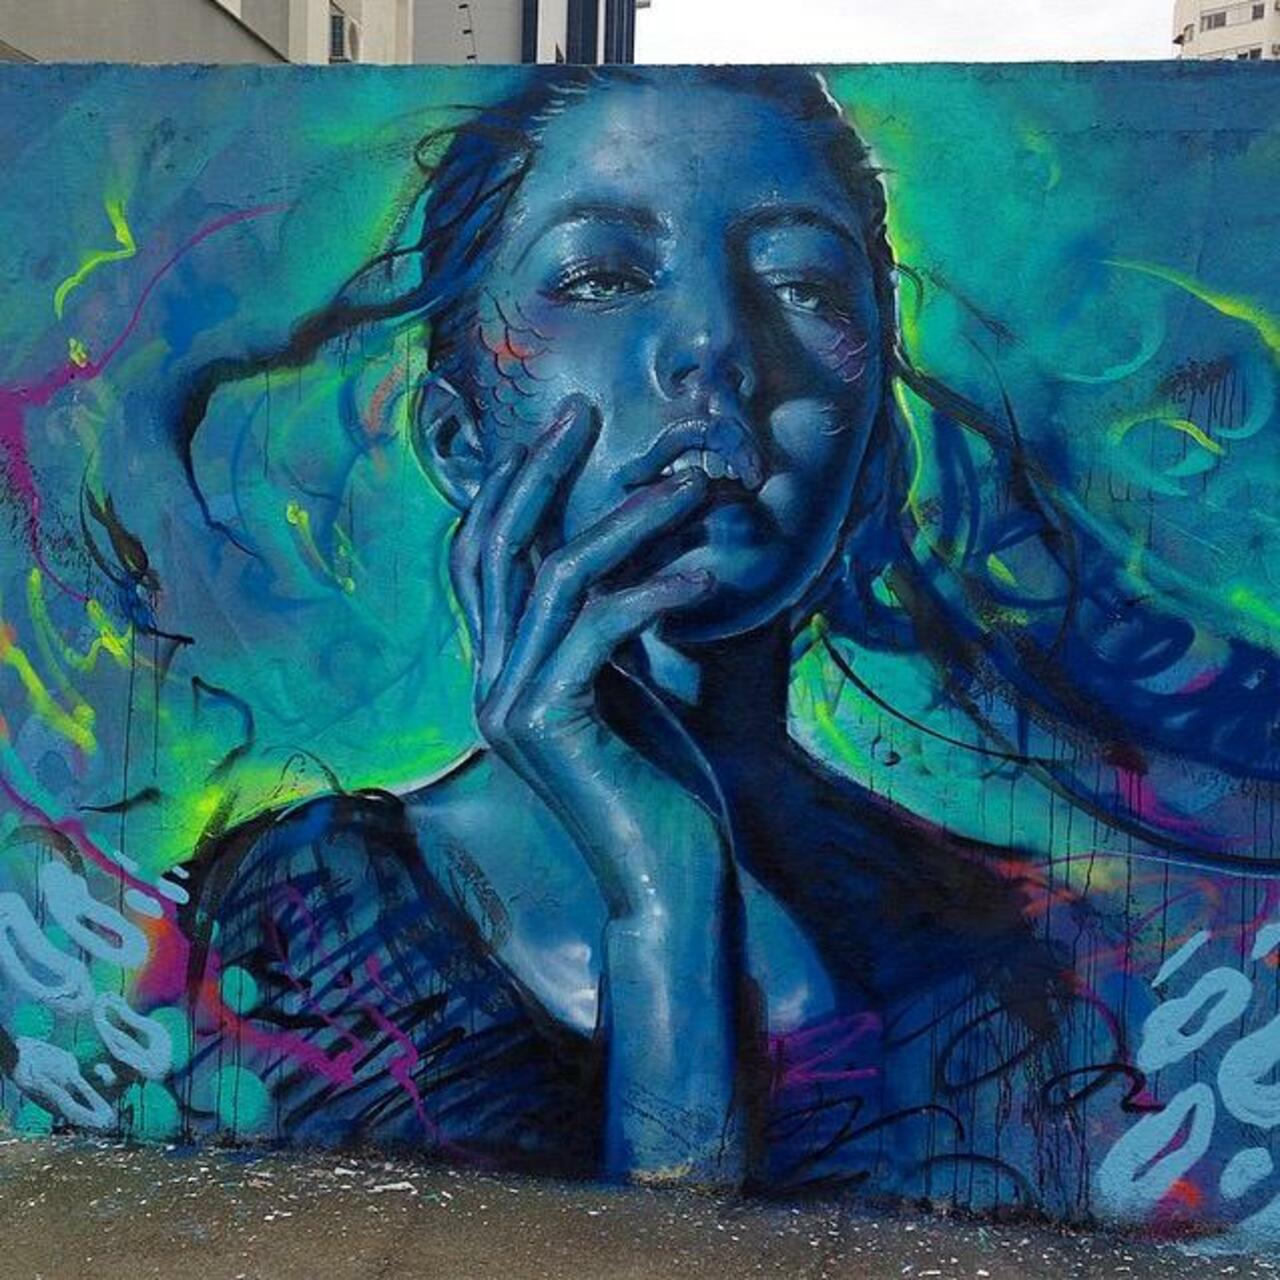 Thiago Valdi new Street Art piece titled 'Day Dreamer'

#art #mural #graffiti #streetart http://t.co/baIVPsVfrk